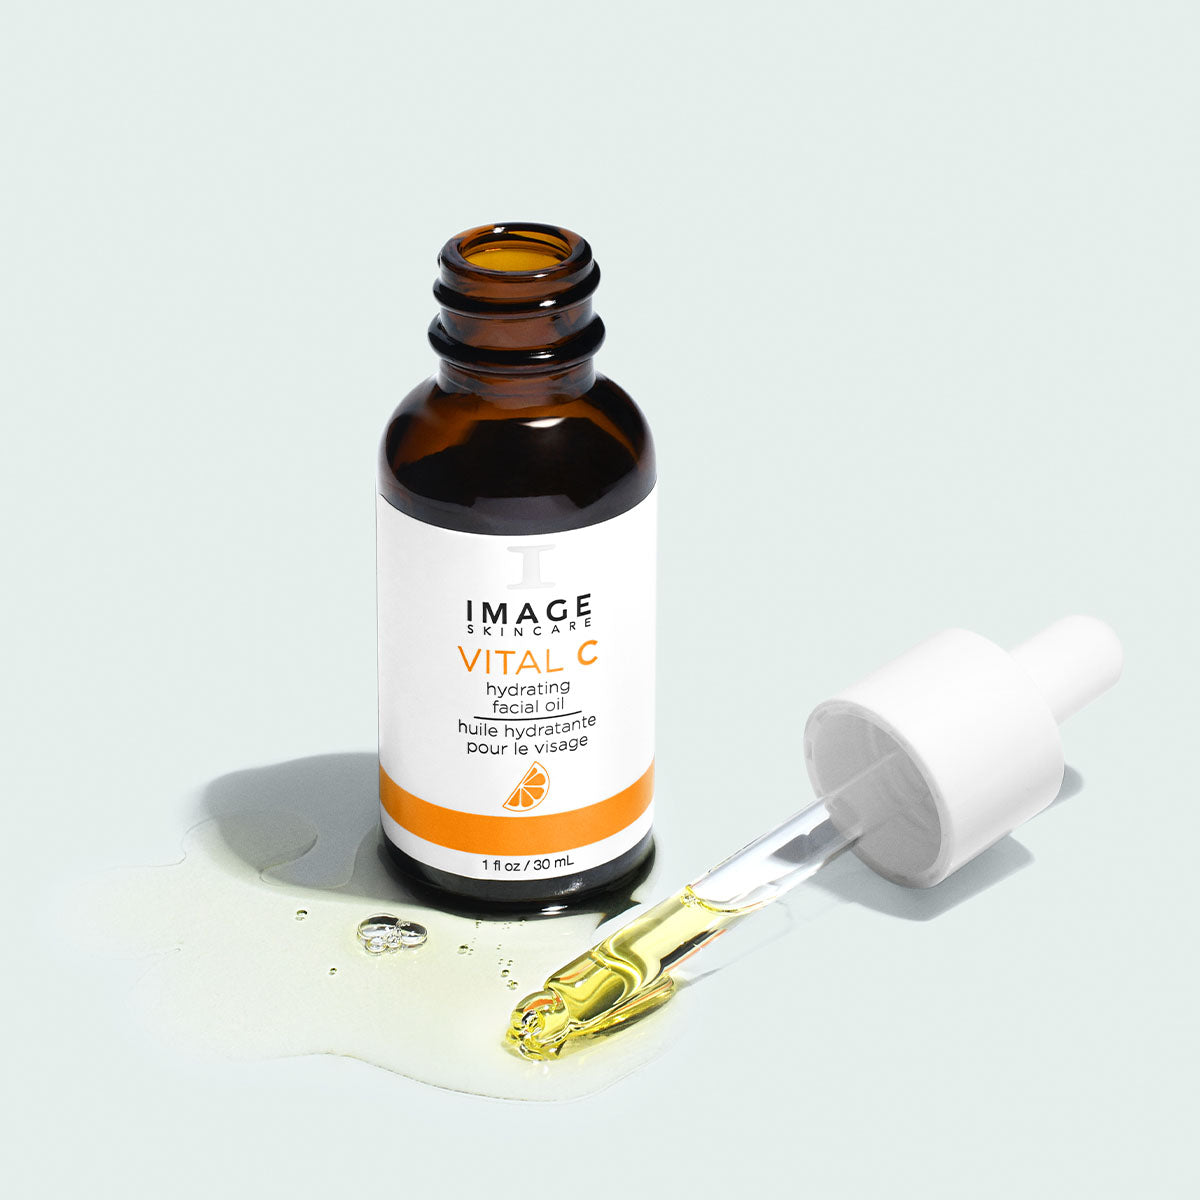 Image Skincare - Vital C- Hydrating Facial Oil